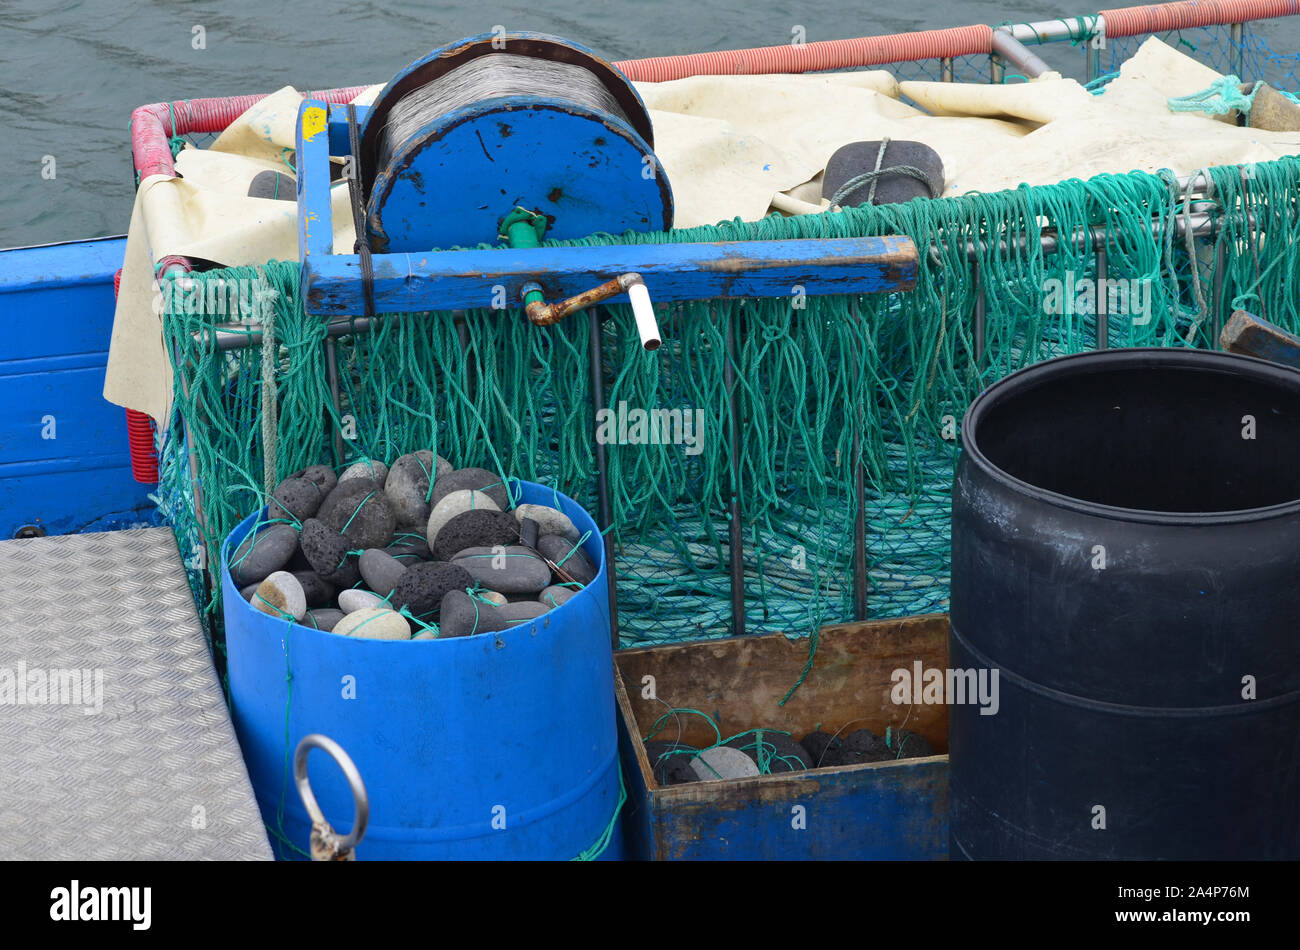 Artisanal deep-set handline fishing vessels and fishing gear at